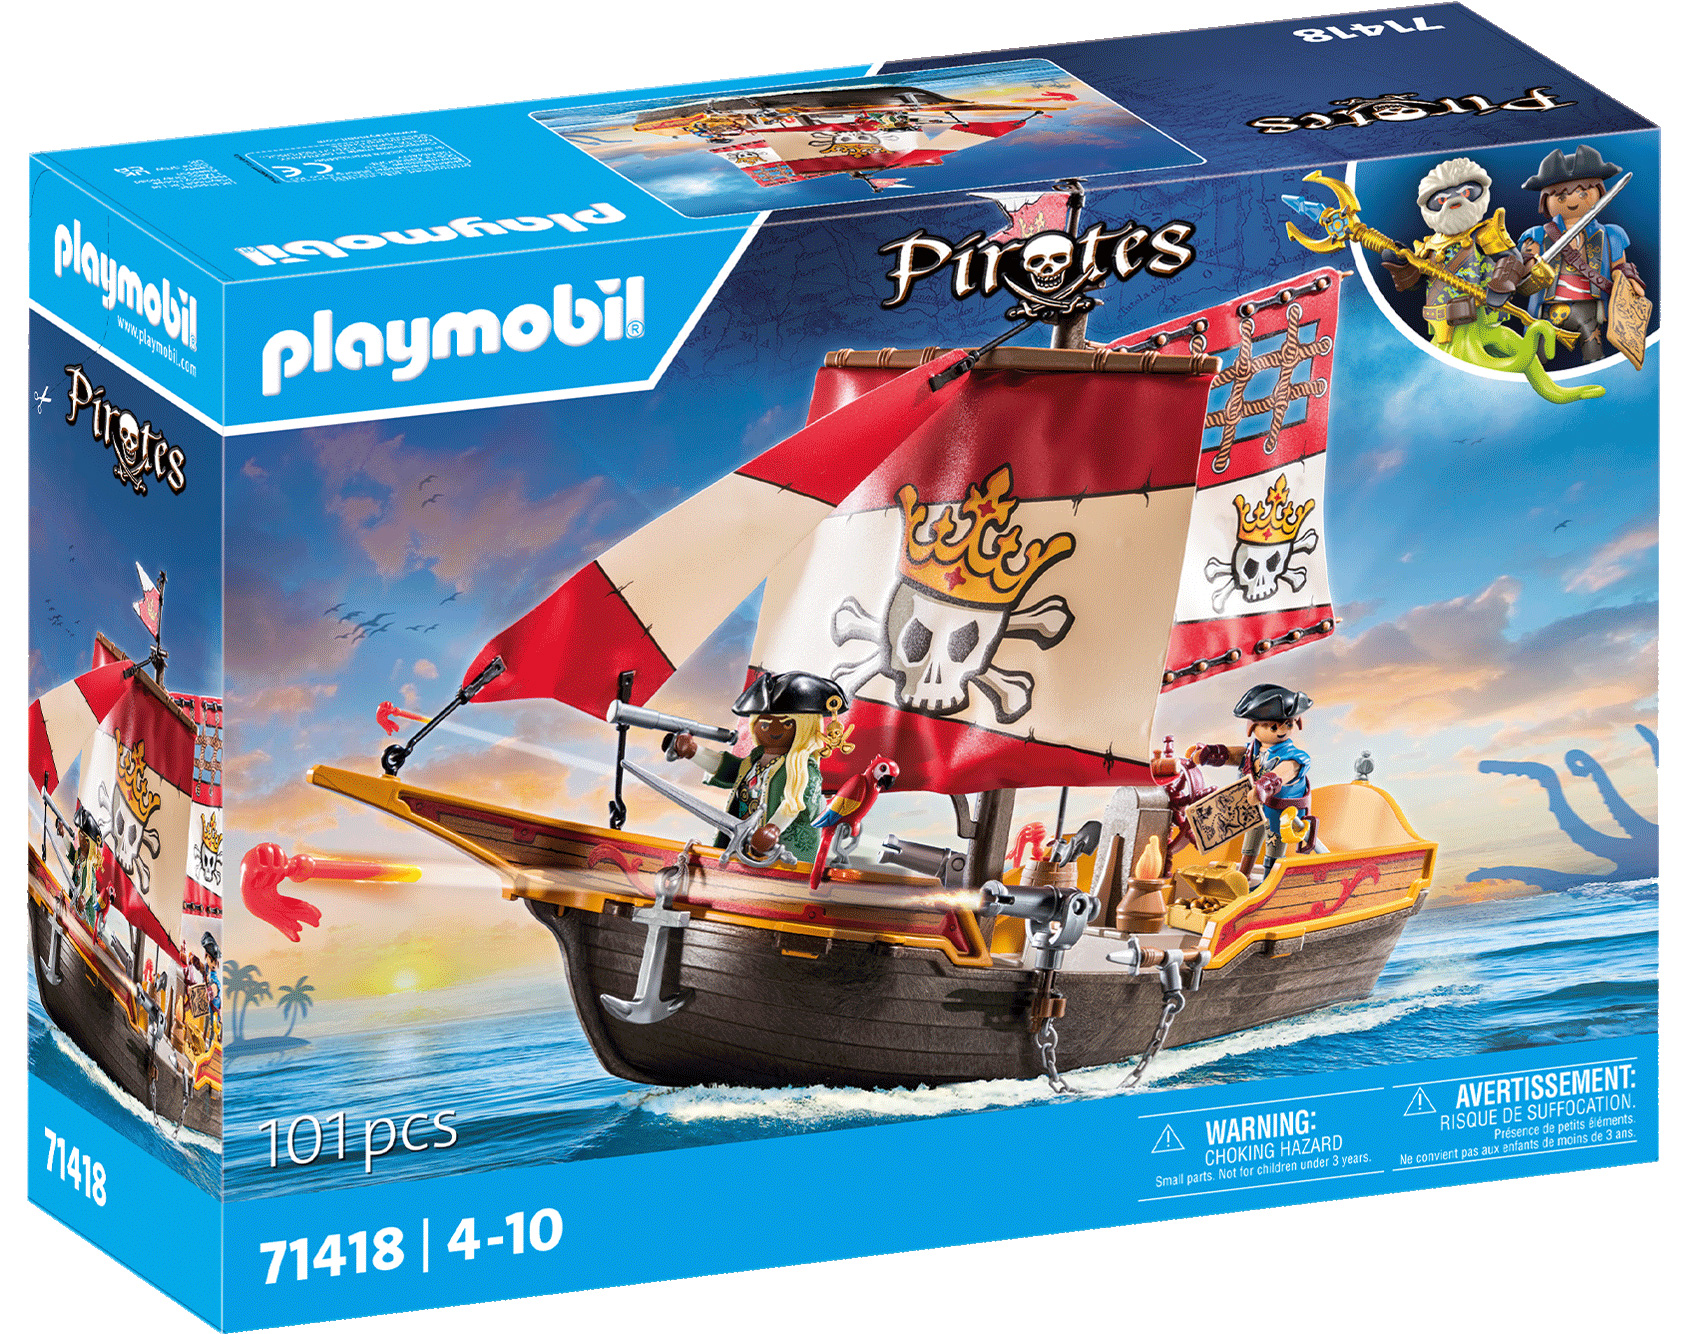 Playmobil - Bateau pirate